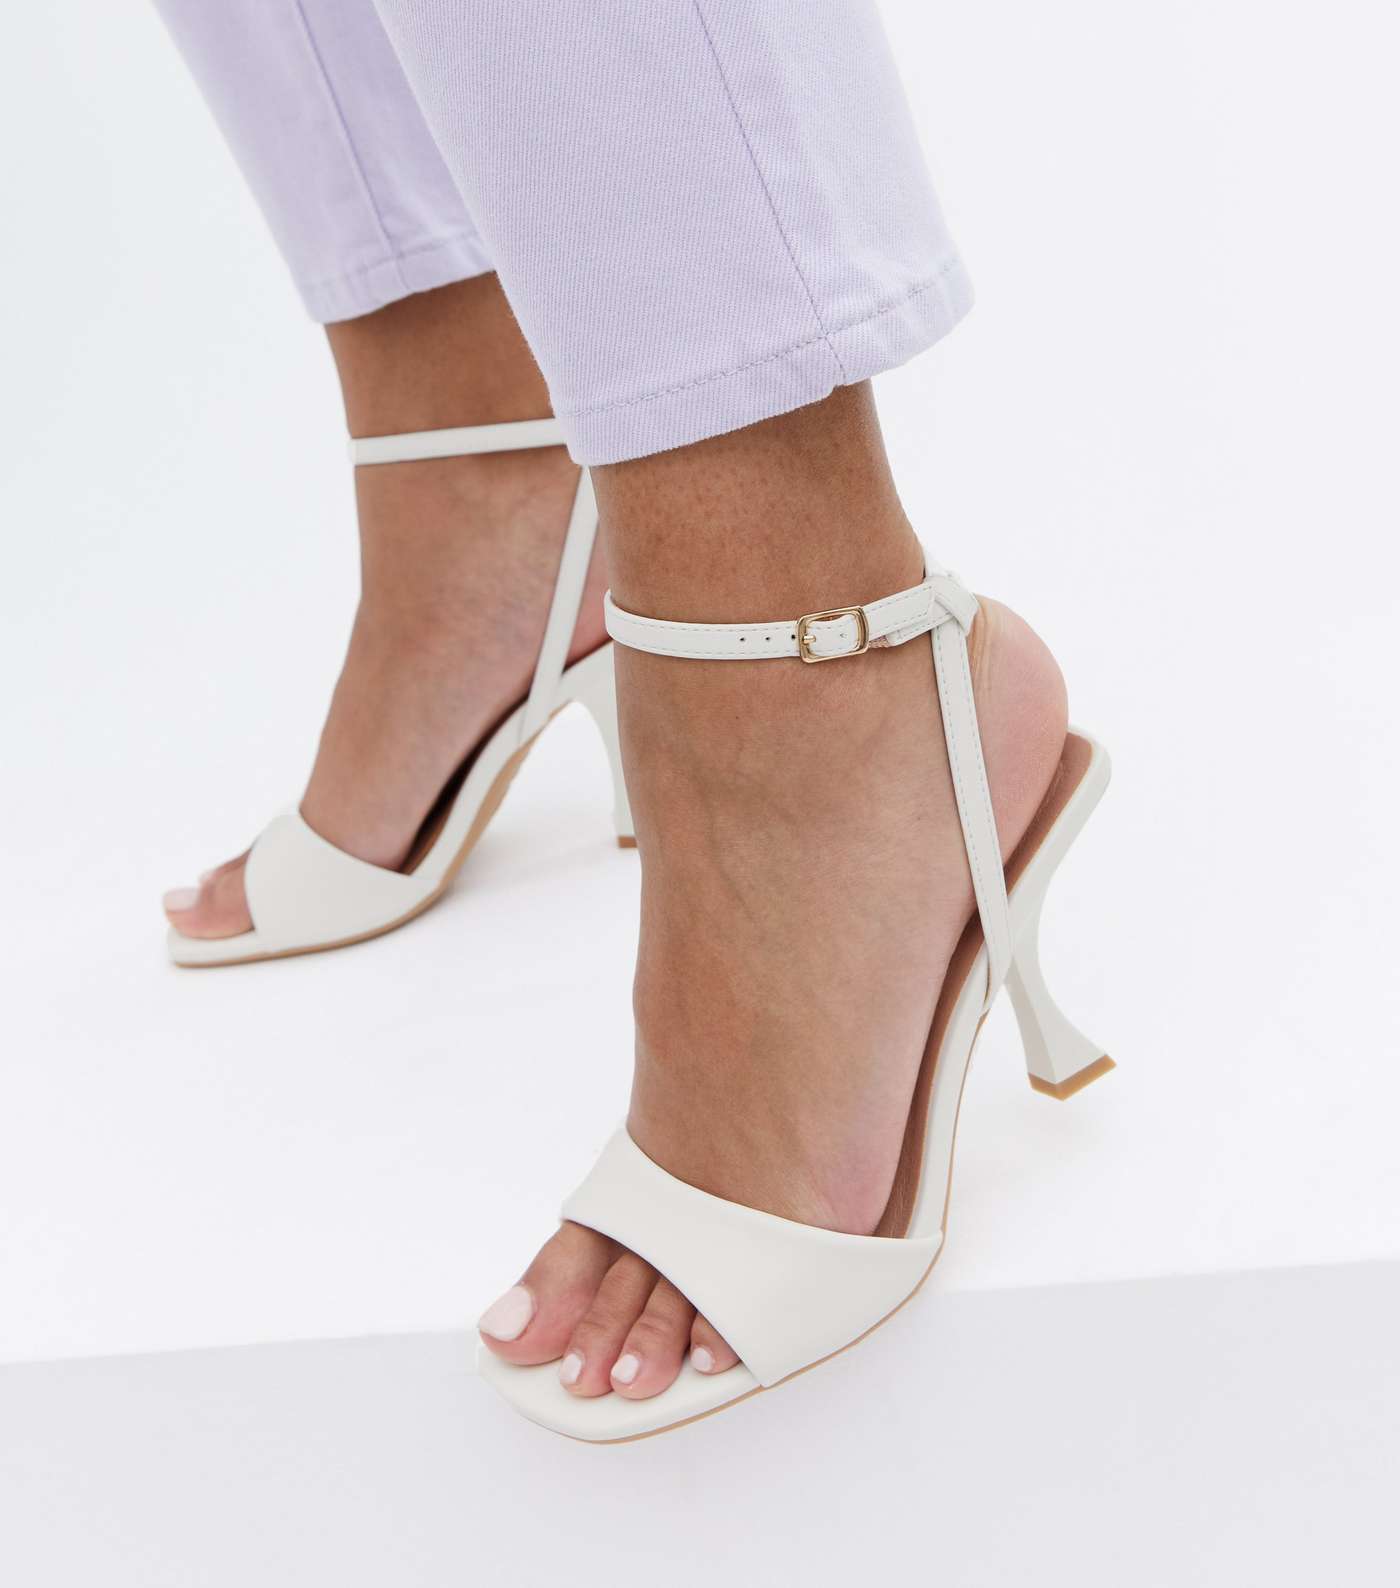 White Curved Stiletto Heel Sandals Image 2